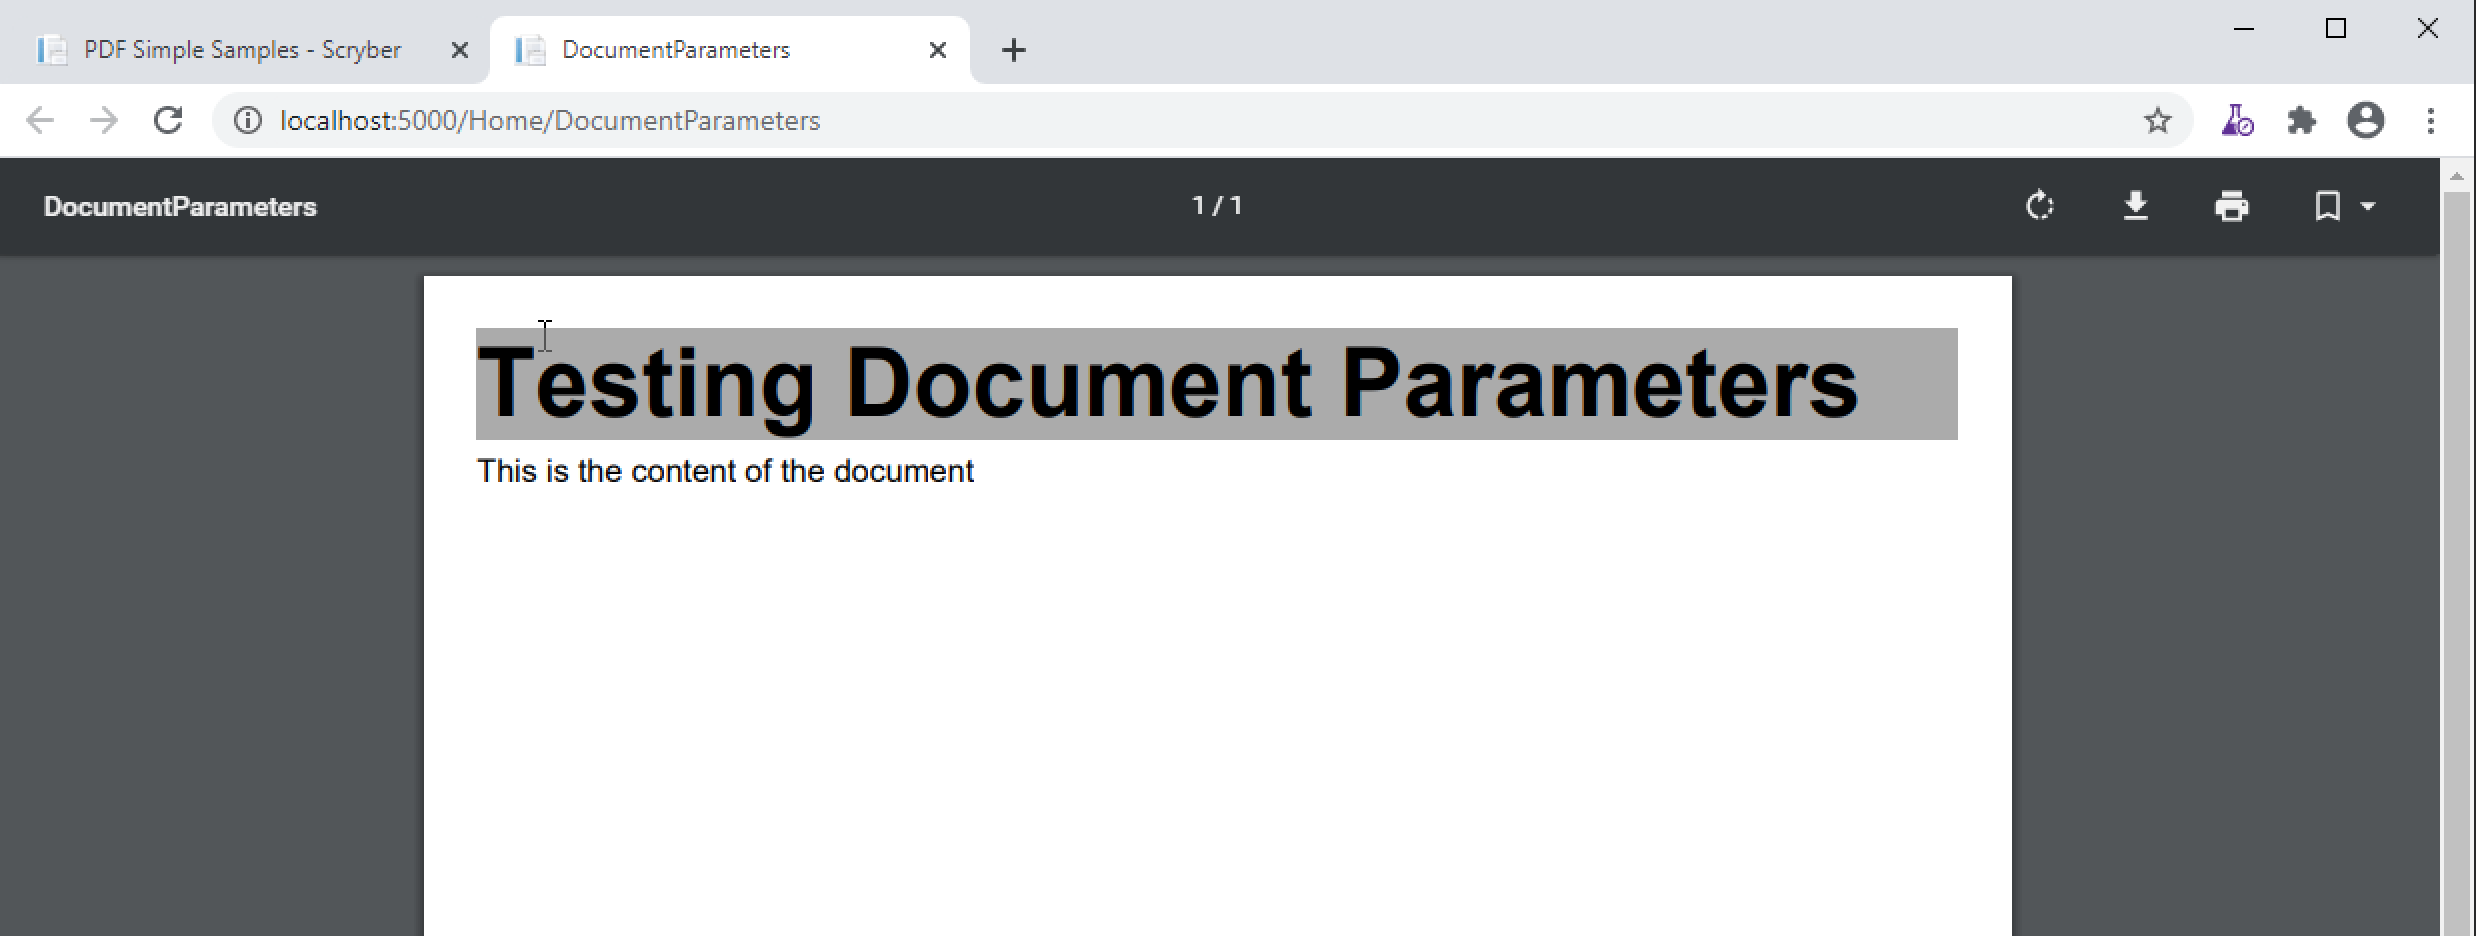 documentparameters.png